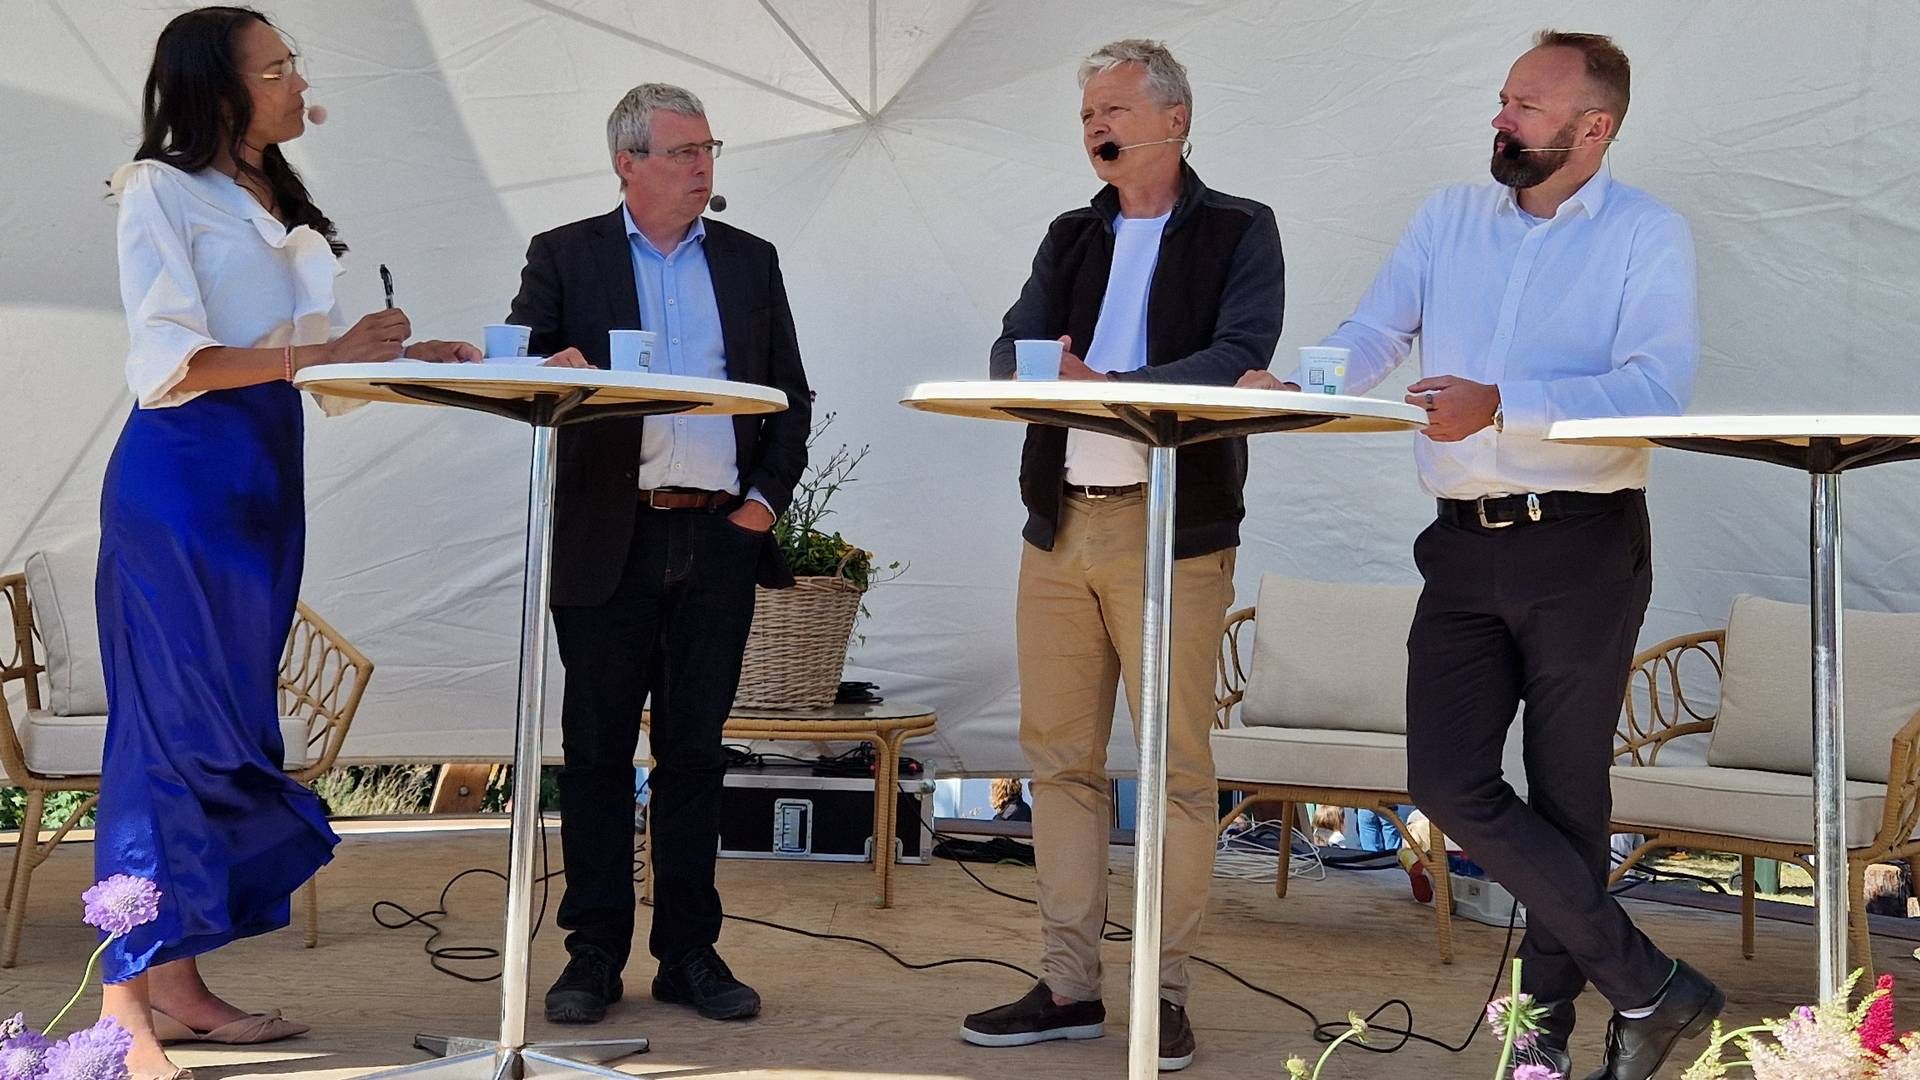 From left: Søren Scherfig, Ørsted's Head of Offshore Wind Denmark, Michael Nellemann, PKA's Investment Director, and Mikkel Gleerup, CEO of Cadeler. | Photo: Jakob Skouboe